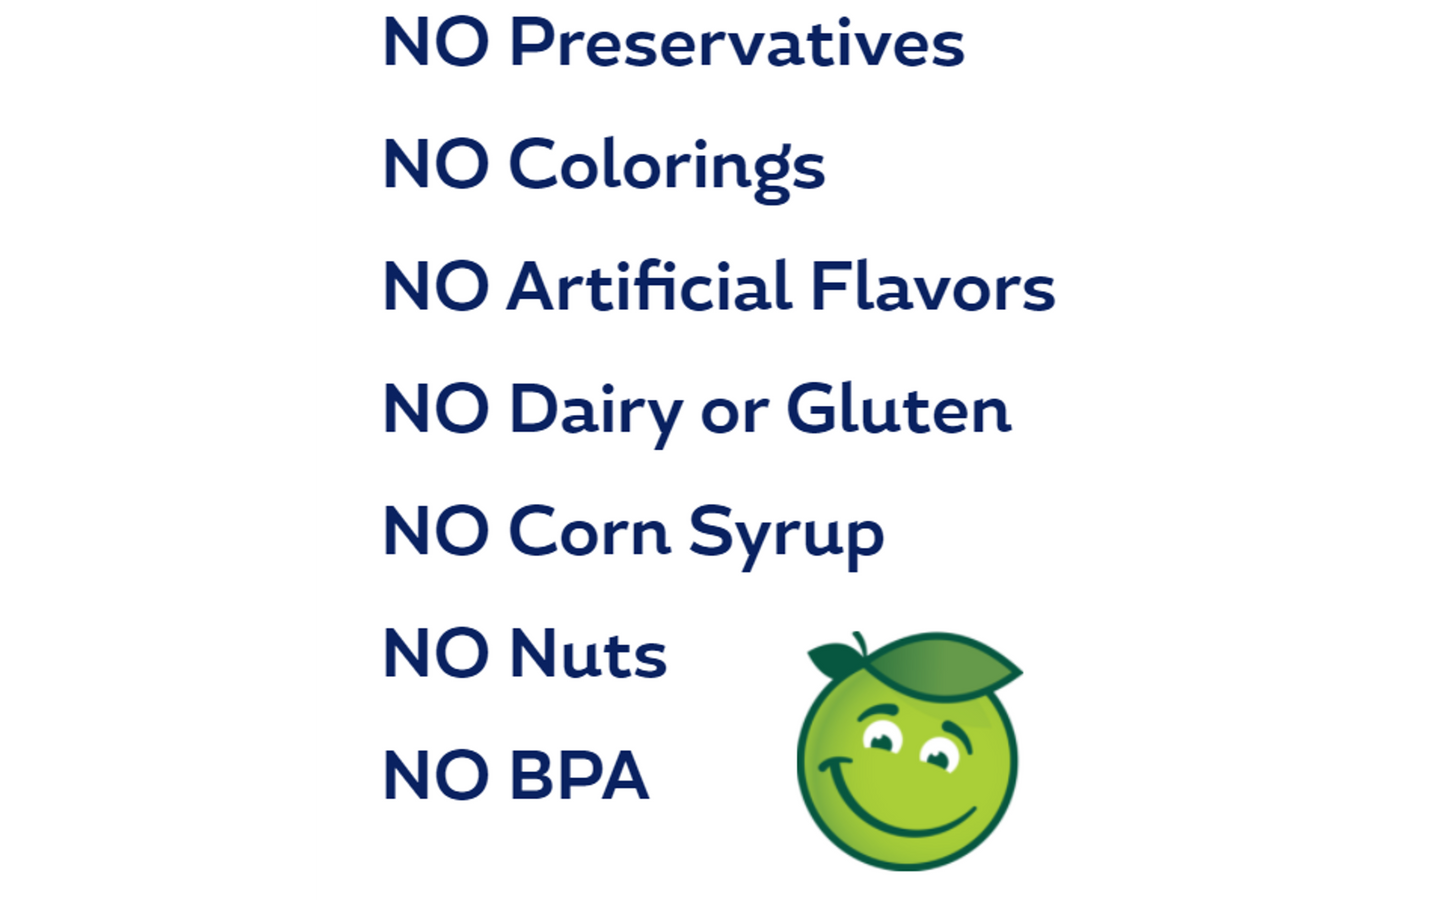 Buddy Fruits Pear, Spinach & Apple fruit & veggies pouch has no preservatives, no colorings, no artificial flavors, no dairy, no gluten, no corn syrup, no nuts, & no BPA.